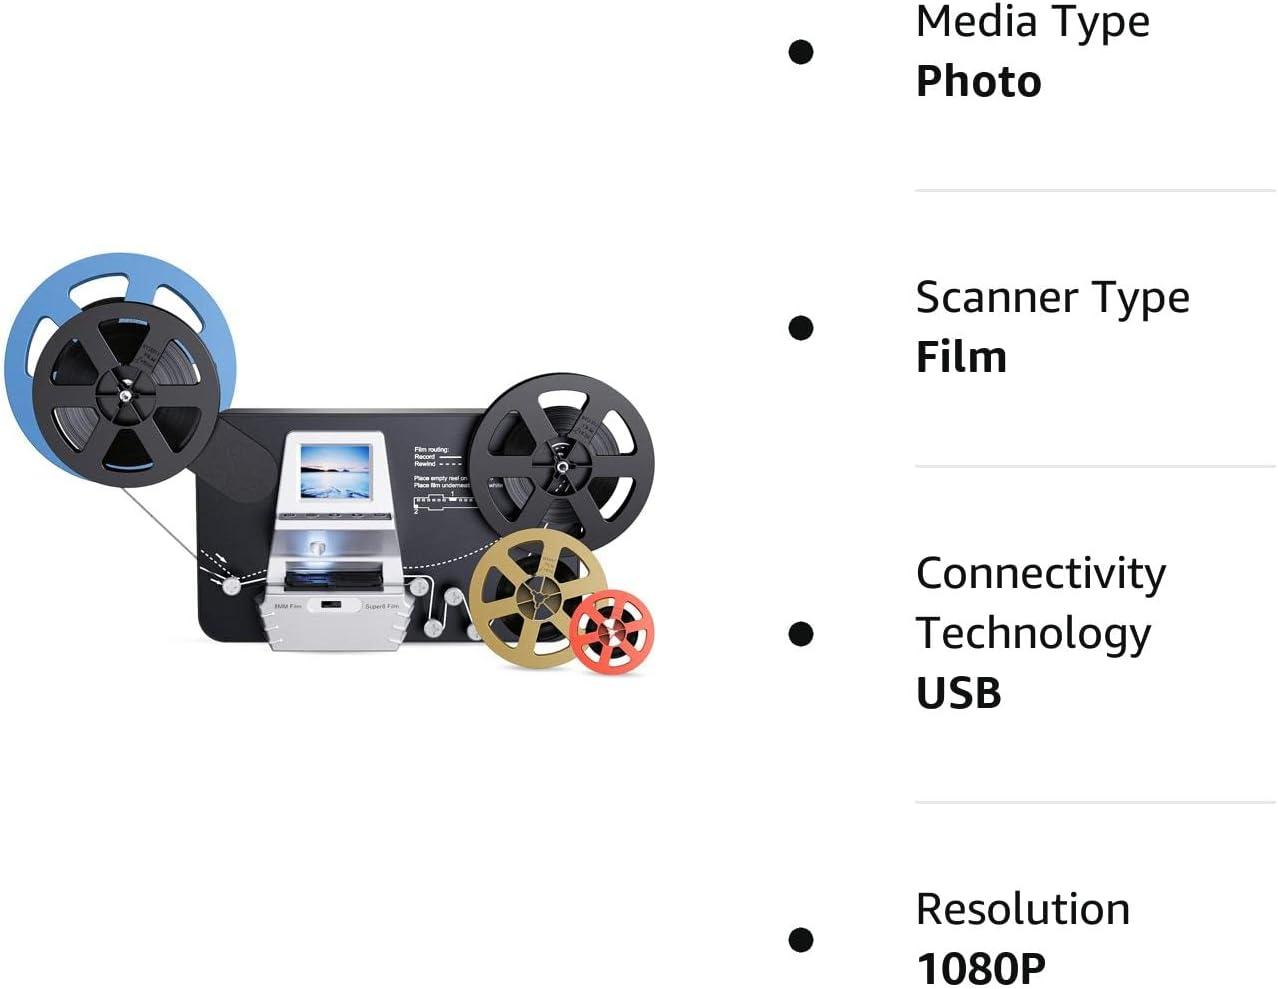 8mm & Super 8 Reels to Digital MovieMaker Film Sanner Converter, 2.4